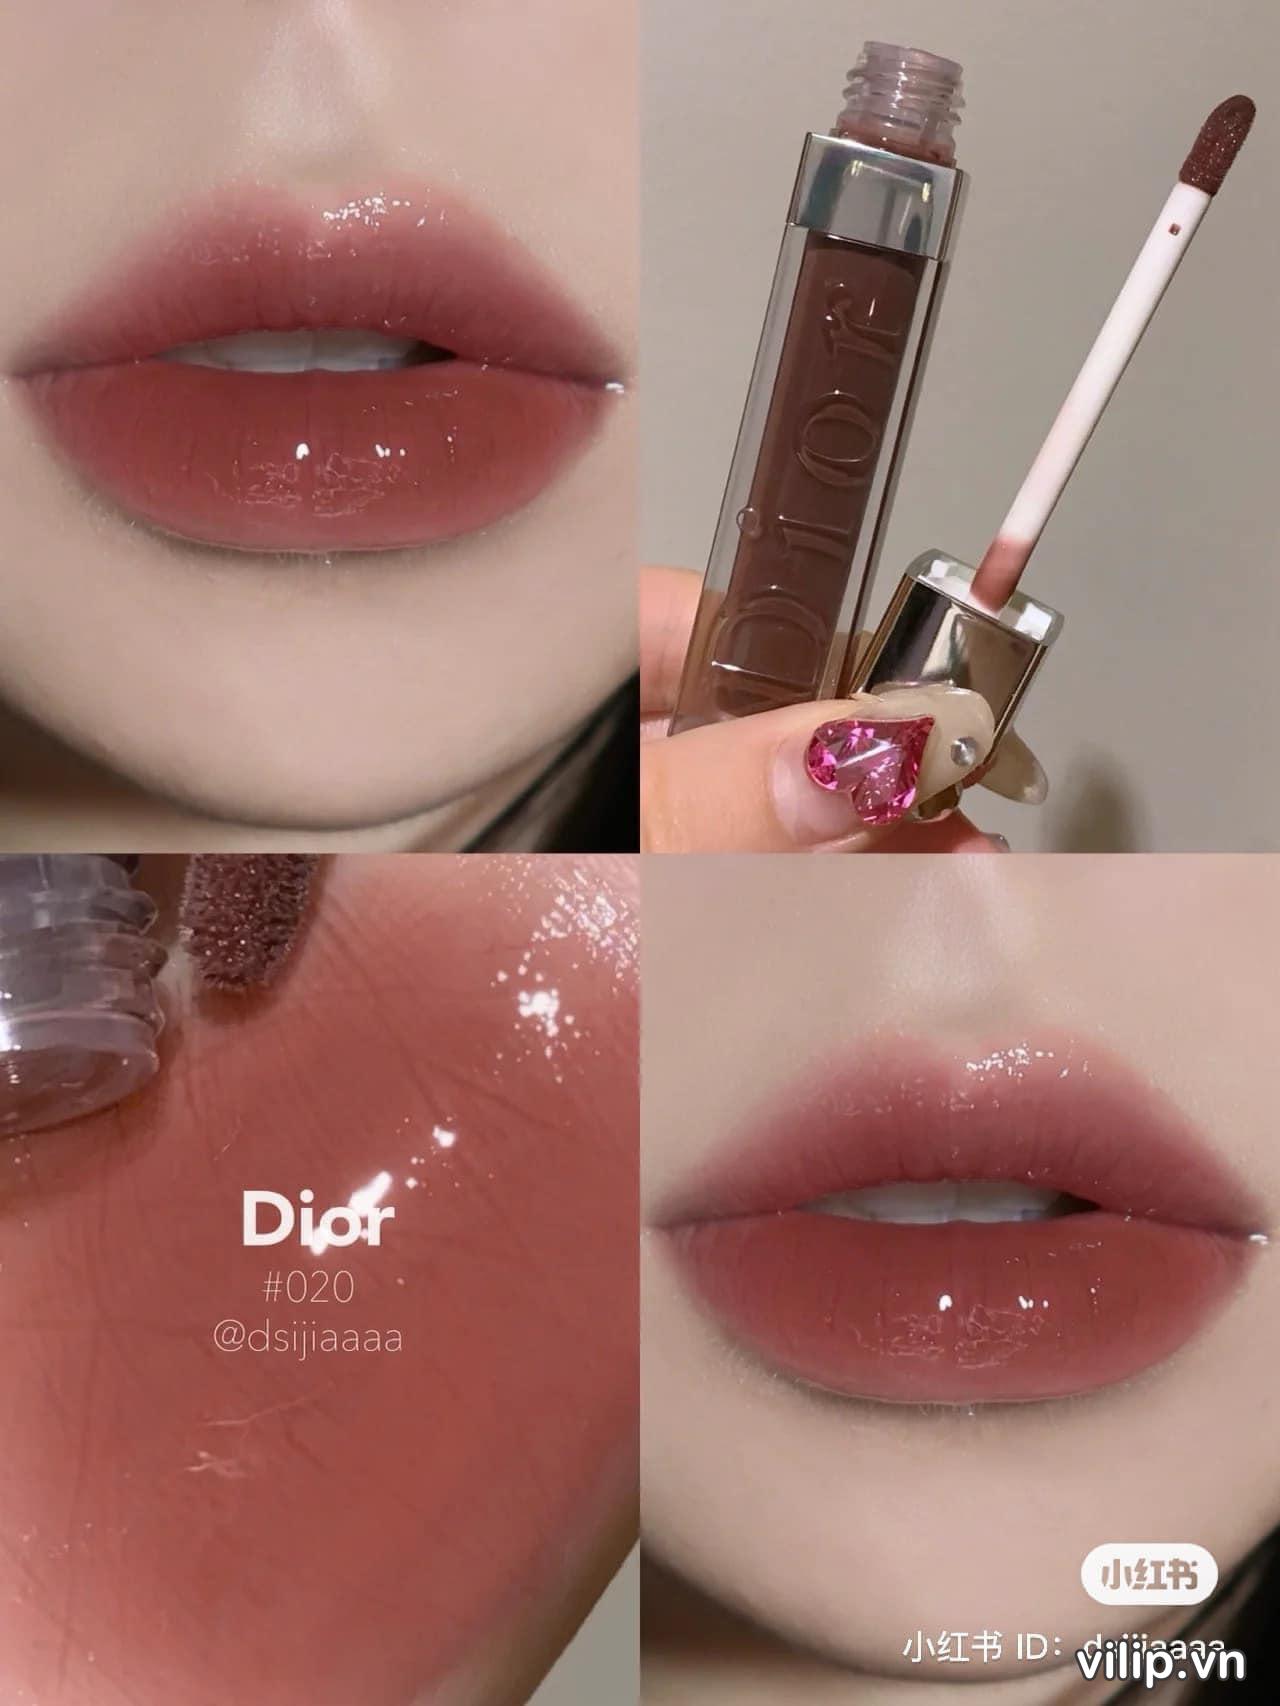 Son Dưỡng Dior Addict Lip Maximizer Collagen 020 Màu Đỏ Nâu 3